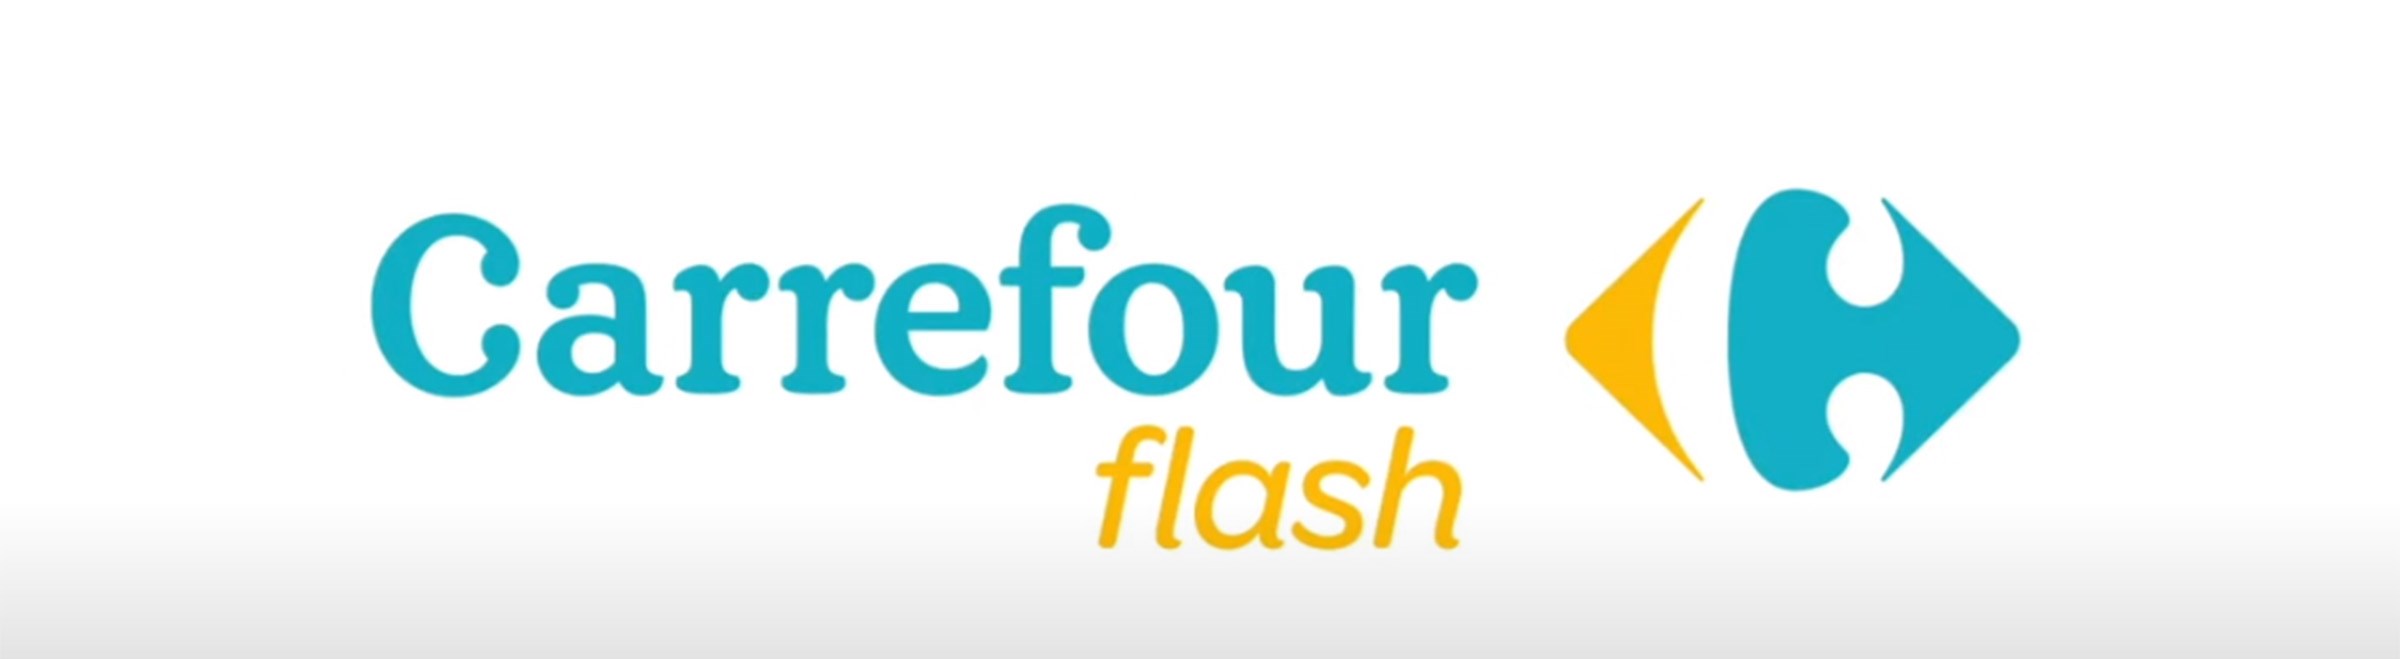 Carrefour flash